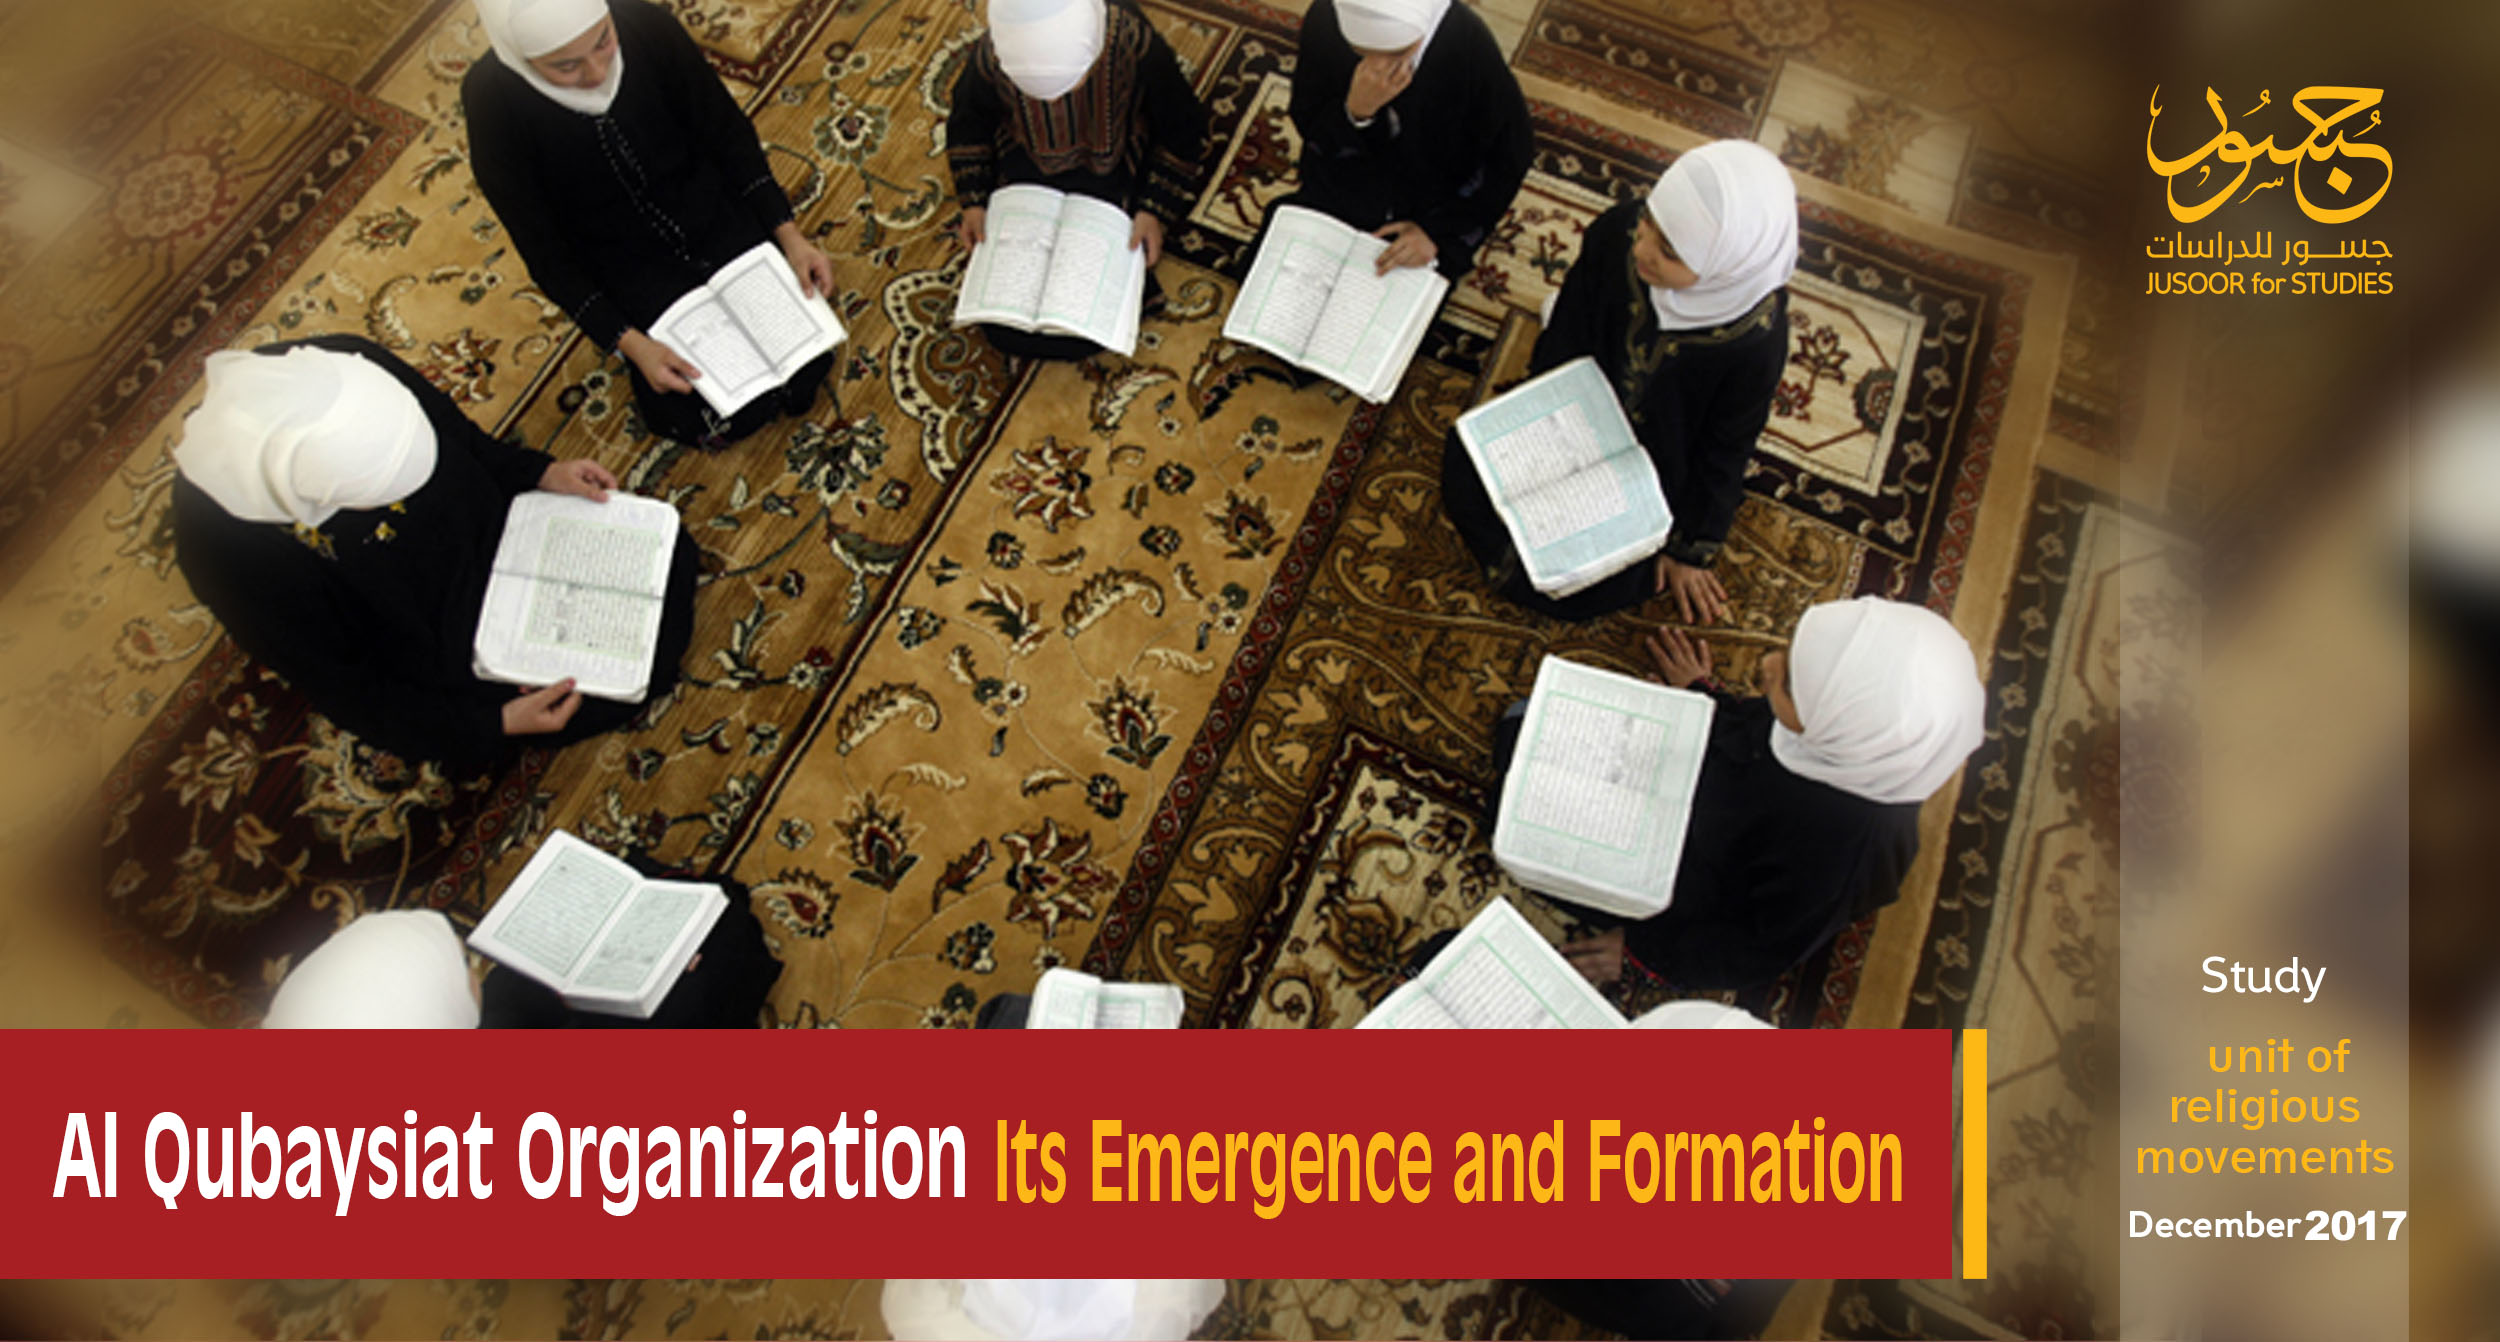 Al Qubaysiat Organization Its Emergence and Formation